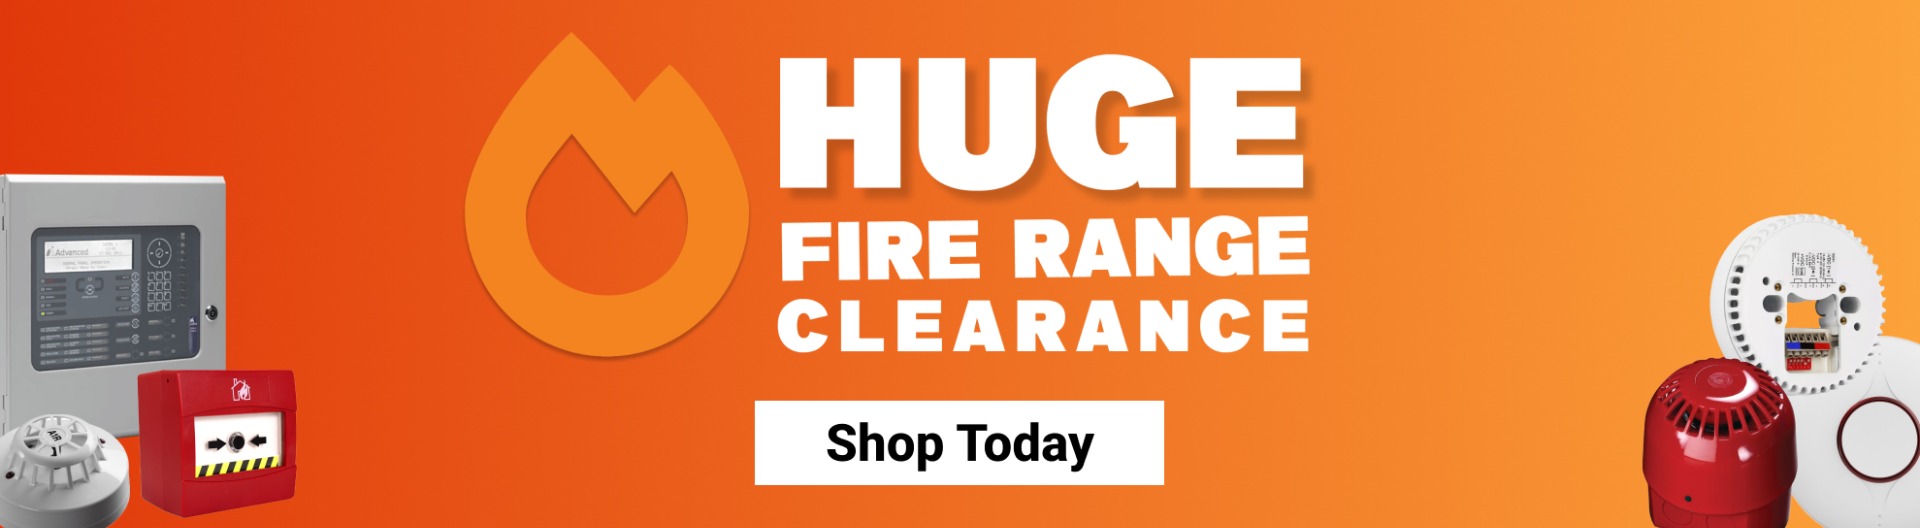 WEB_BANNER_-_Huge_Fire_Range_Clearance